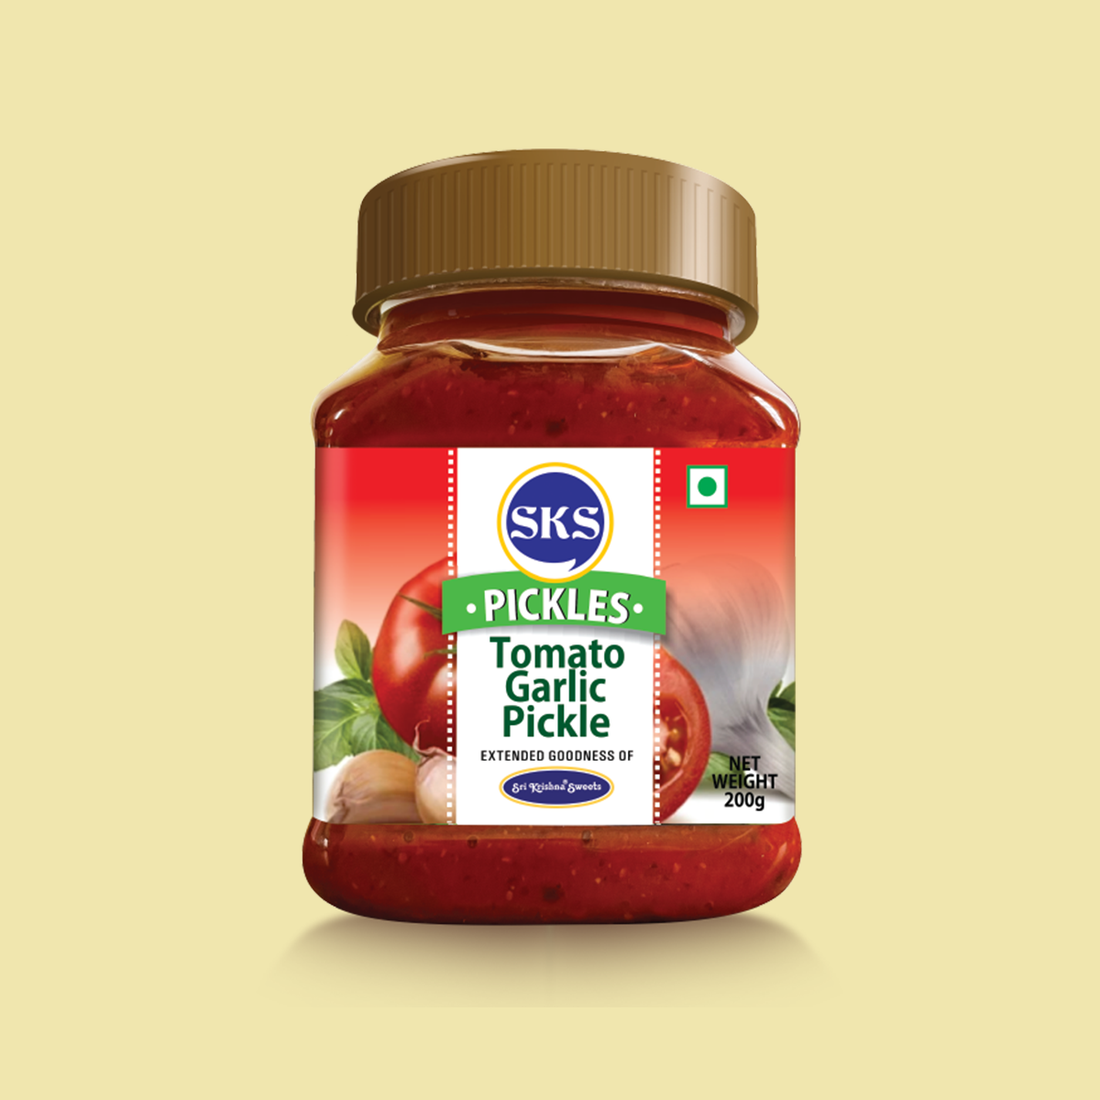 Sri Krishna Sweets Tomato Garlic Pickle - 200 GM